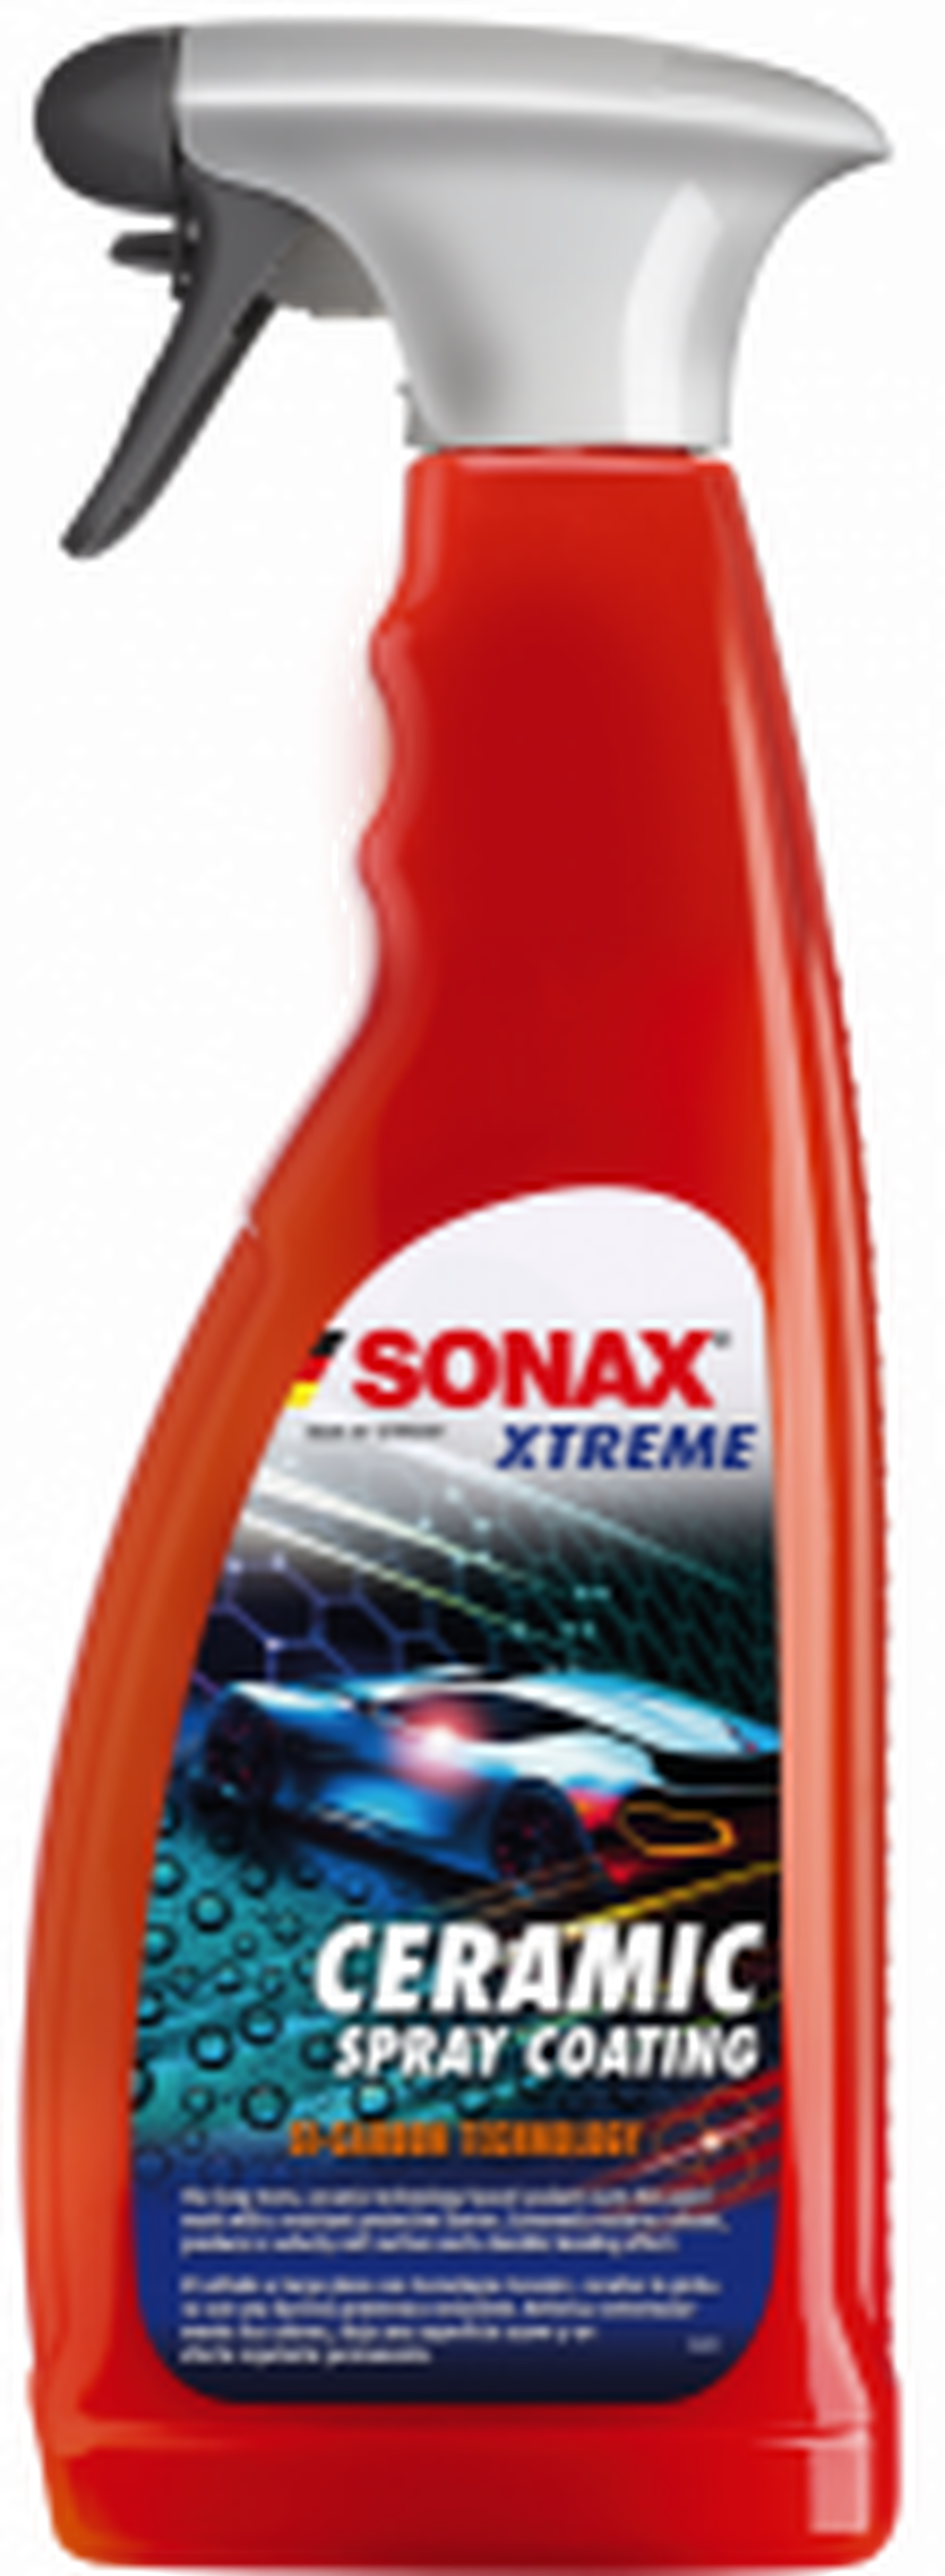 Sonax Ceramic Spray Coating - Detailing Connect